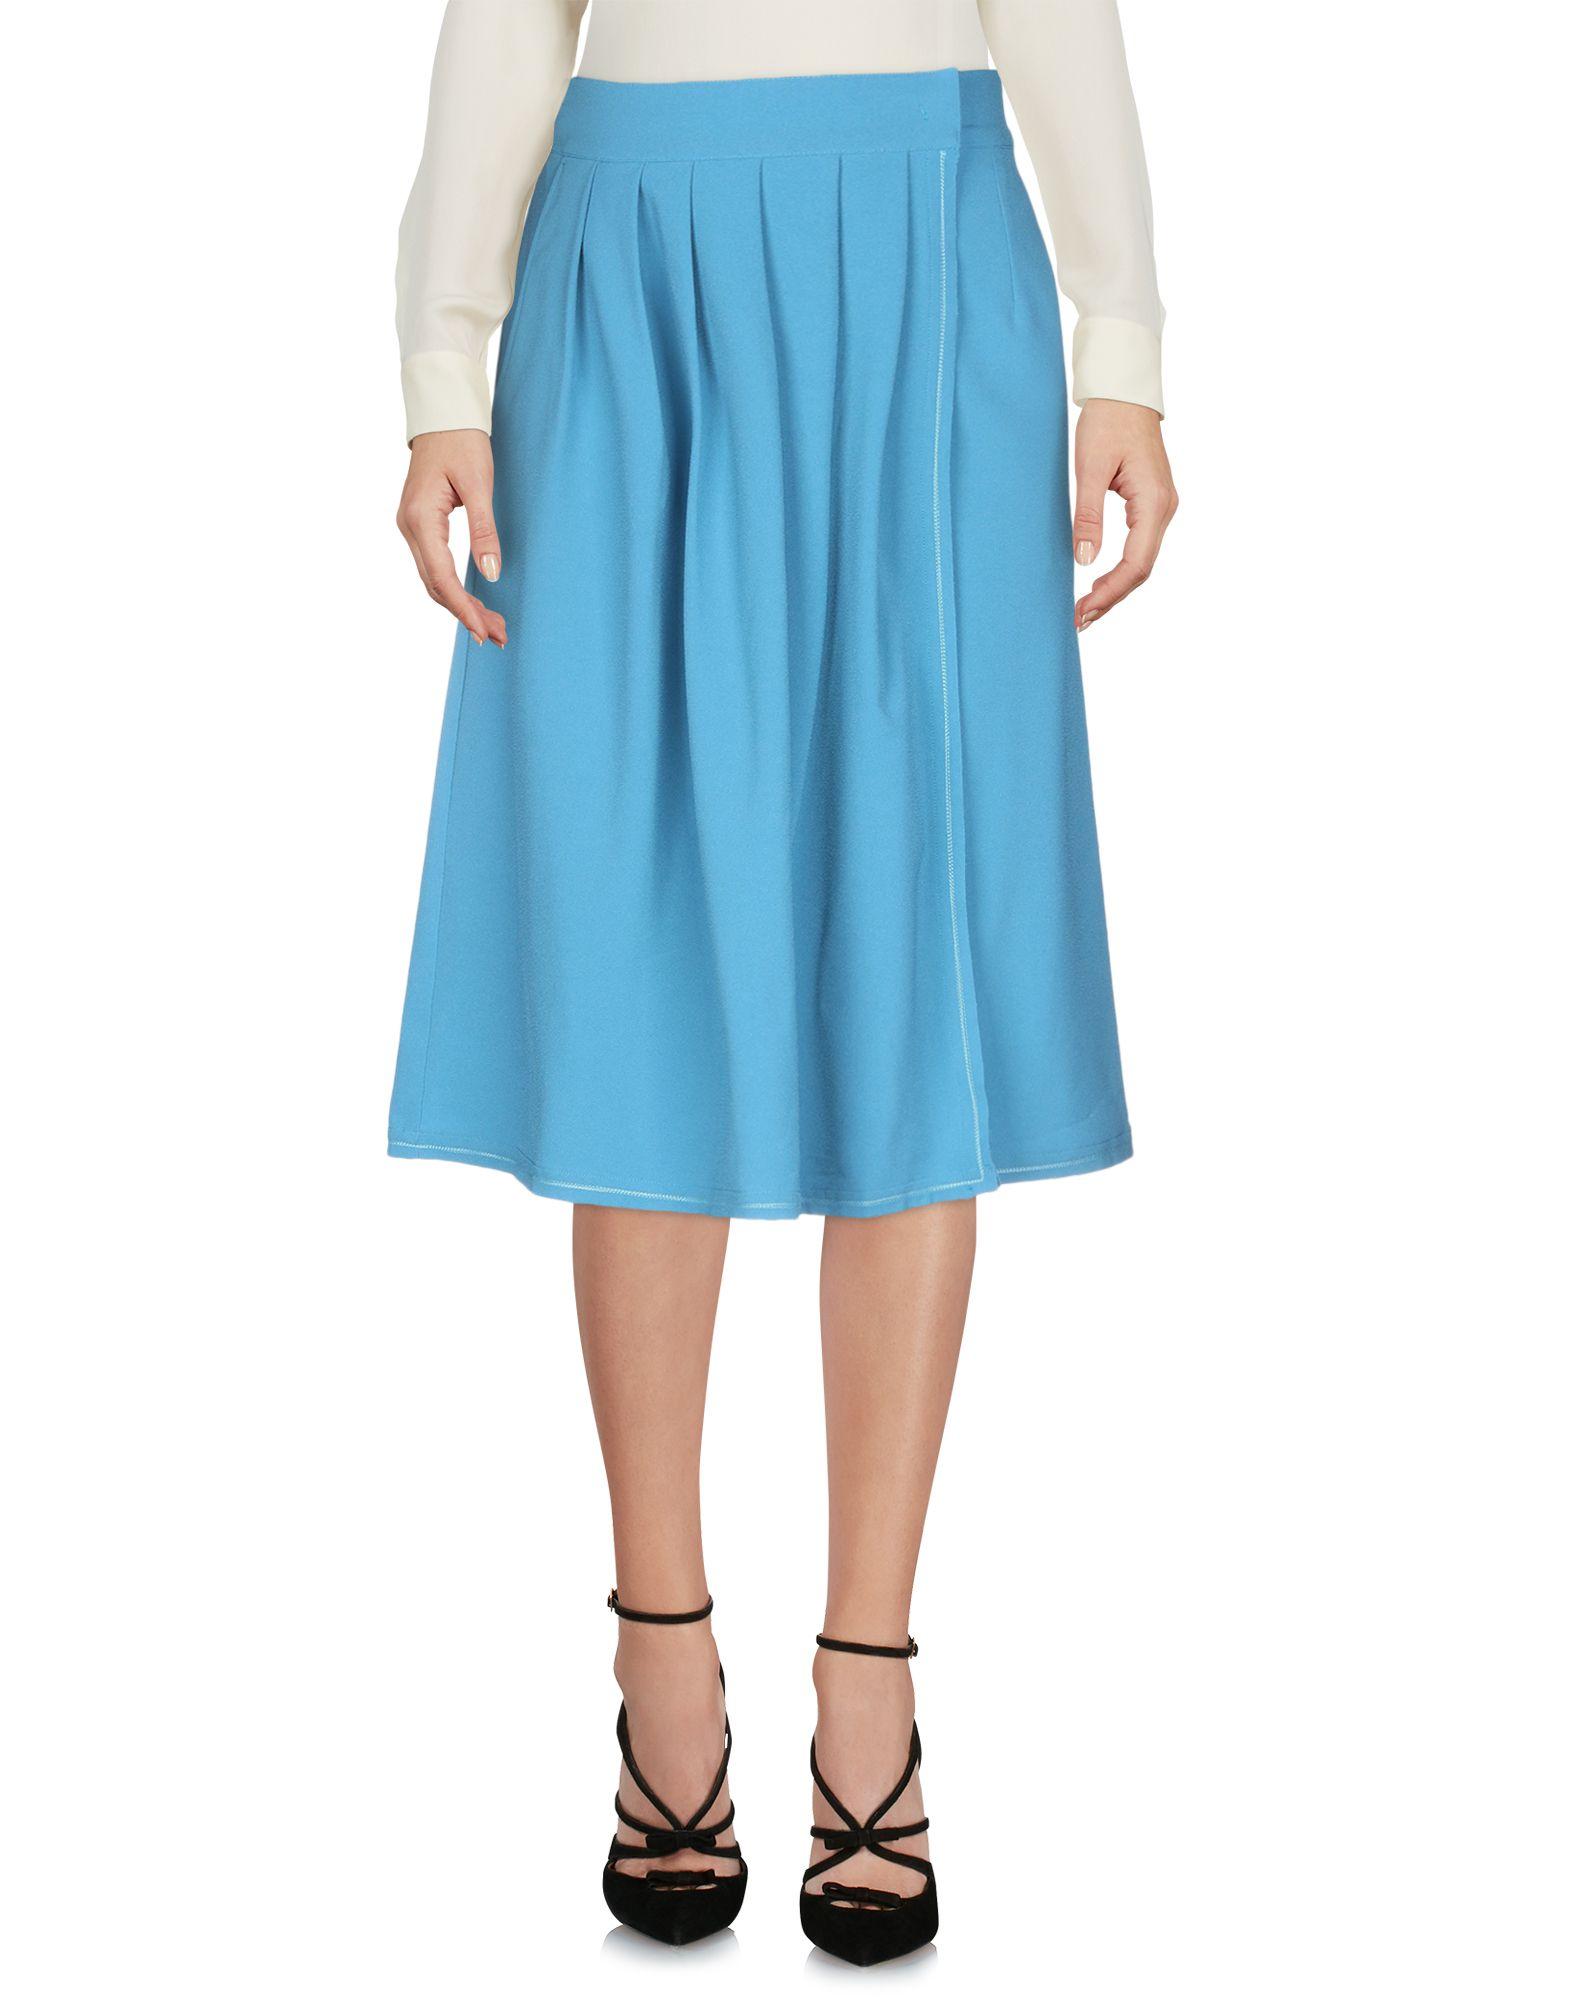 Department 5 Synthetic Knee Length Skirt in Slate Blue (Blue) - Lyst